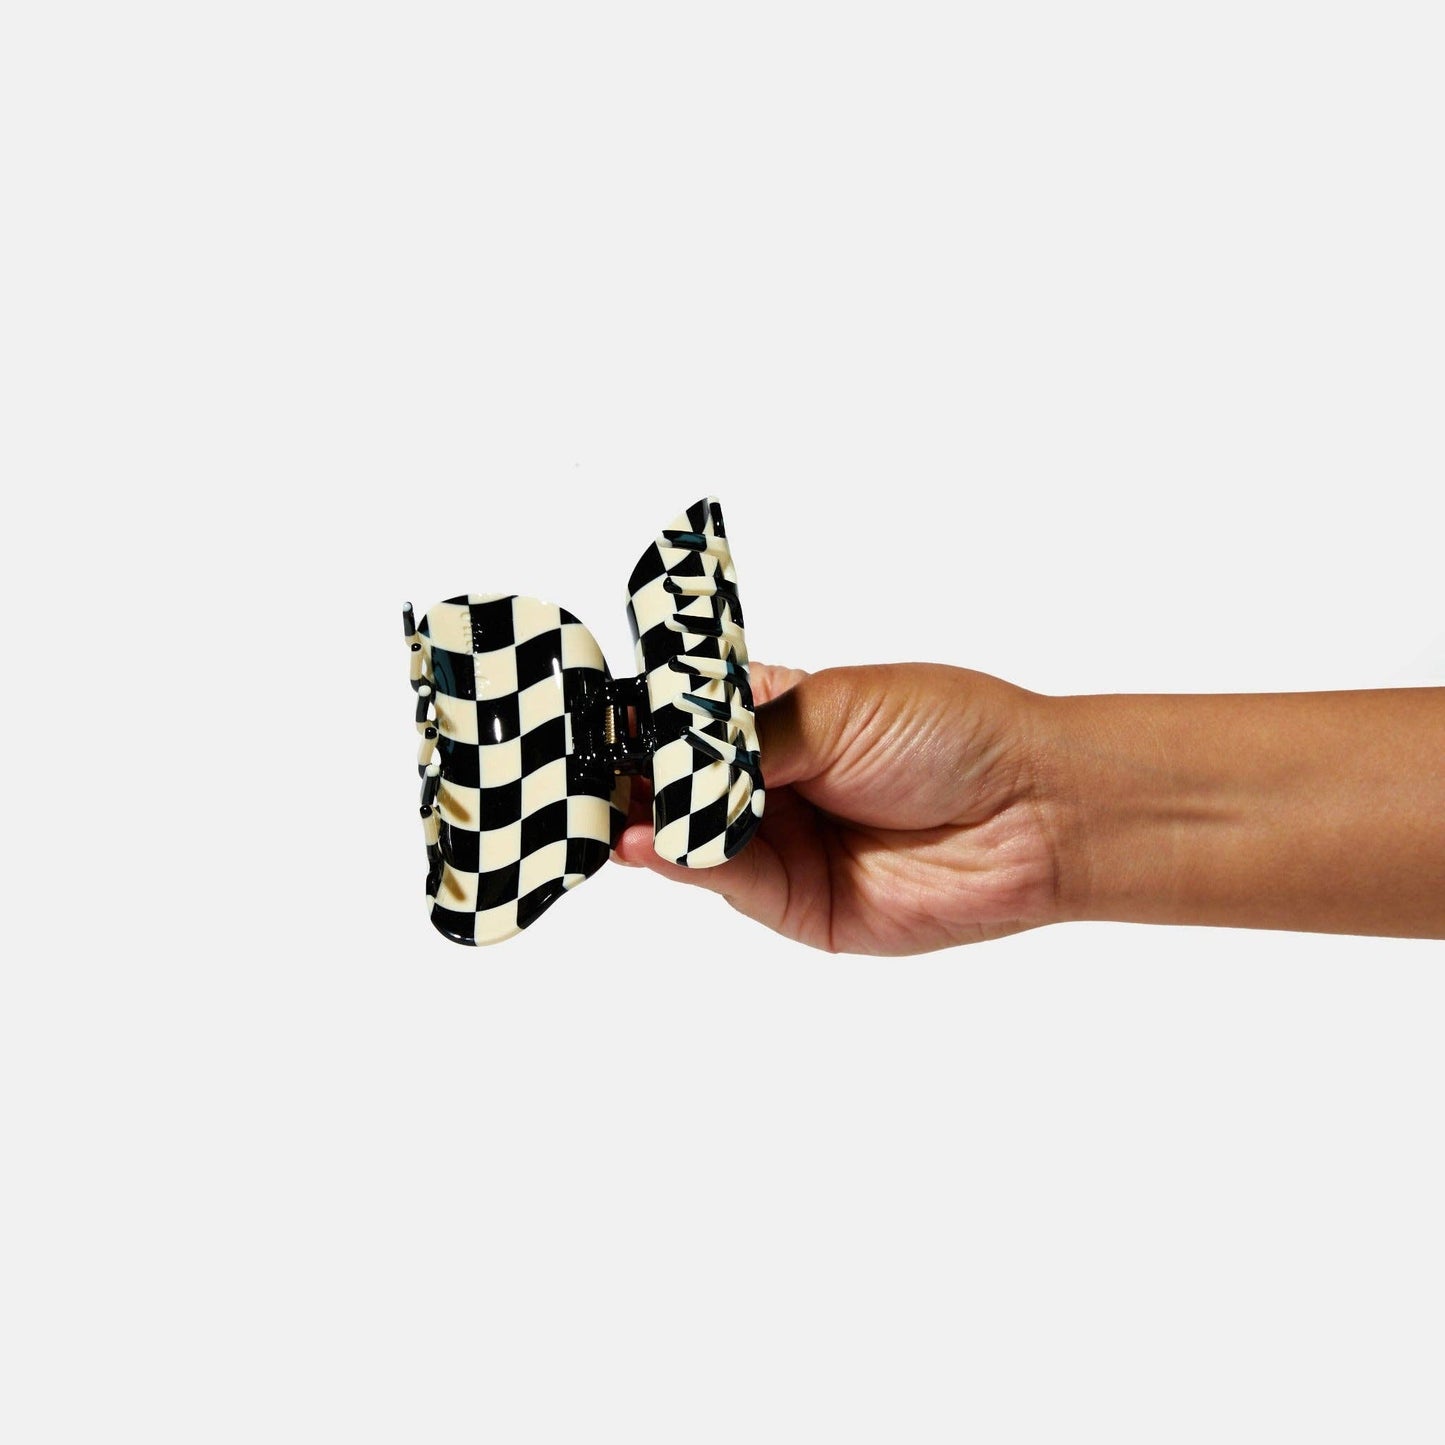 CHUNKS - Checker Claw in Black/White